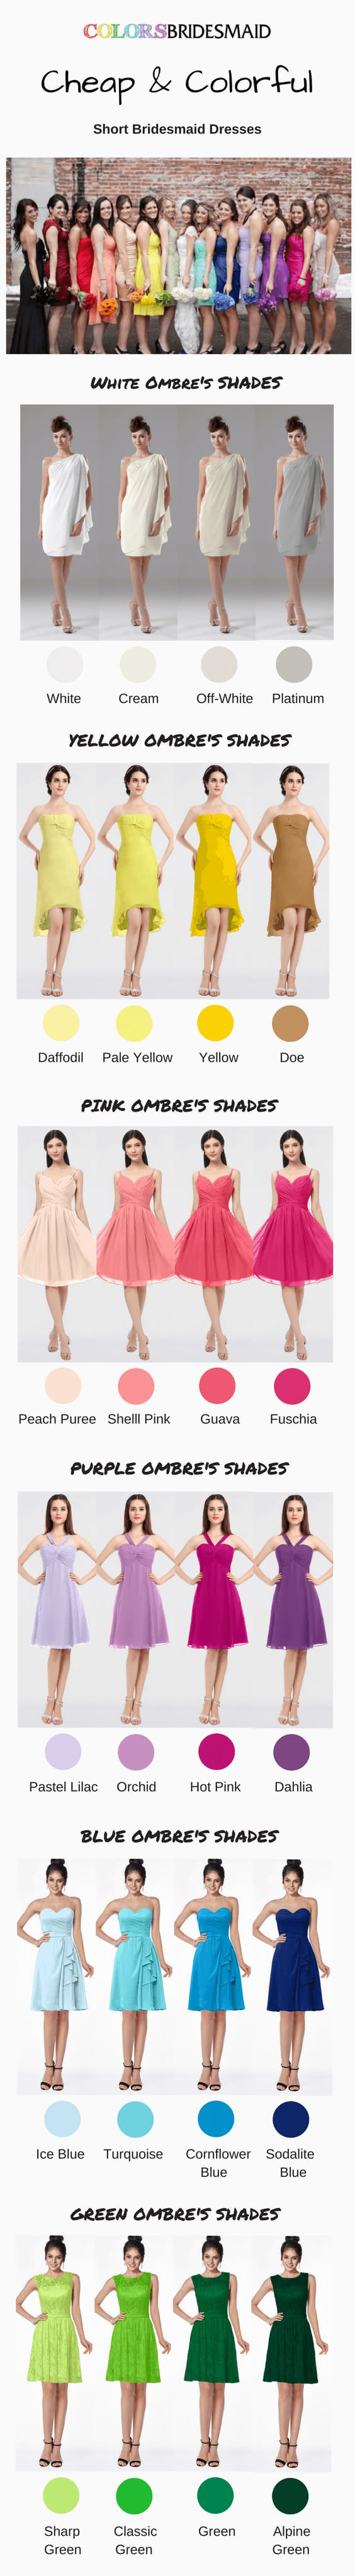 Short Cheap Bridesmaid Dresses in Popular Color Shade - ColorsBridesmaid